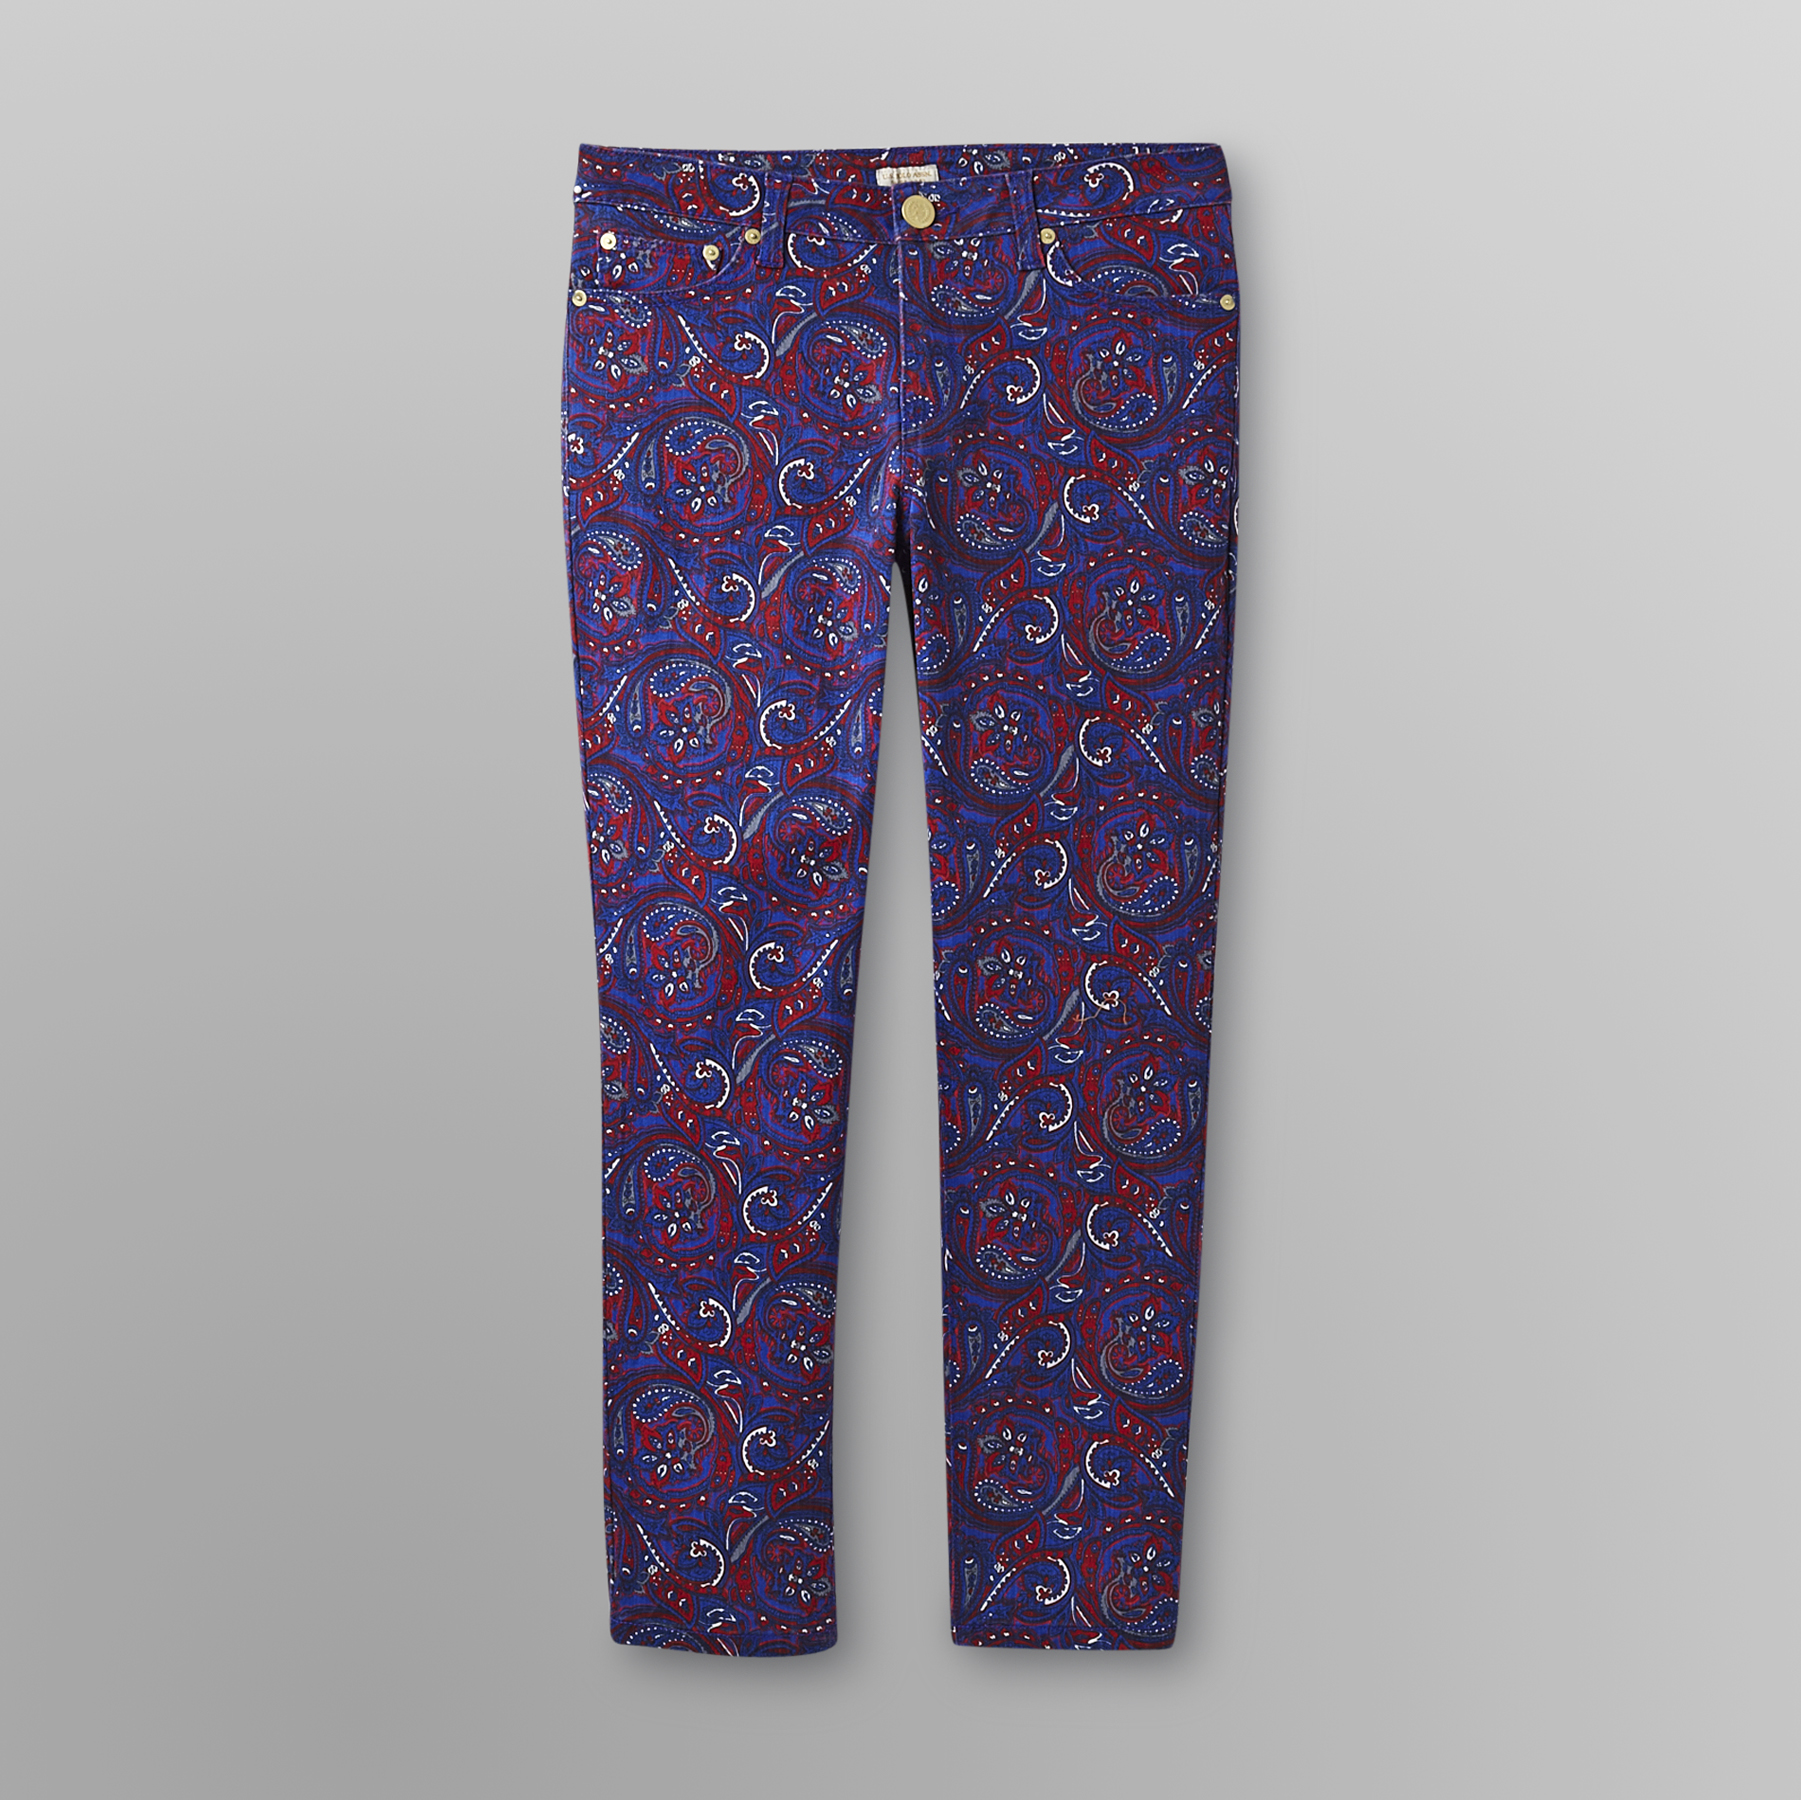 U.S. Polo Assn. Women's Cropped Jeans - Paisley Print